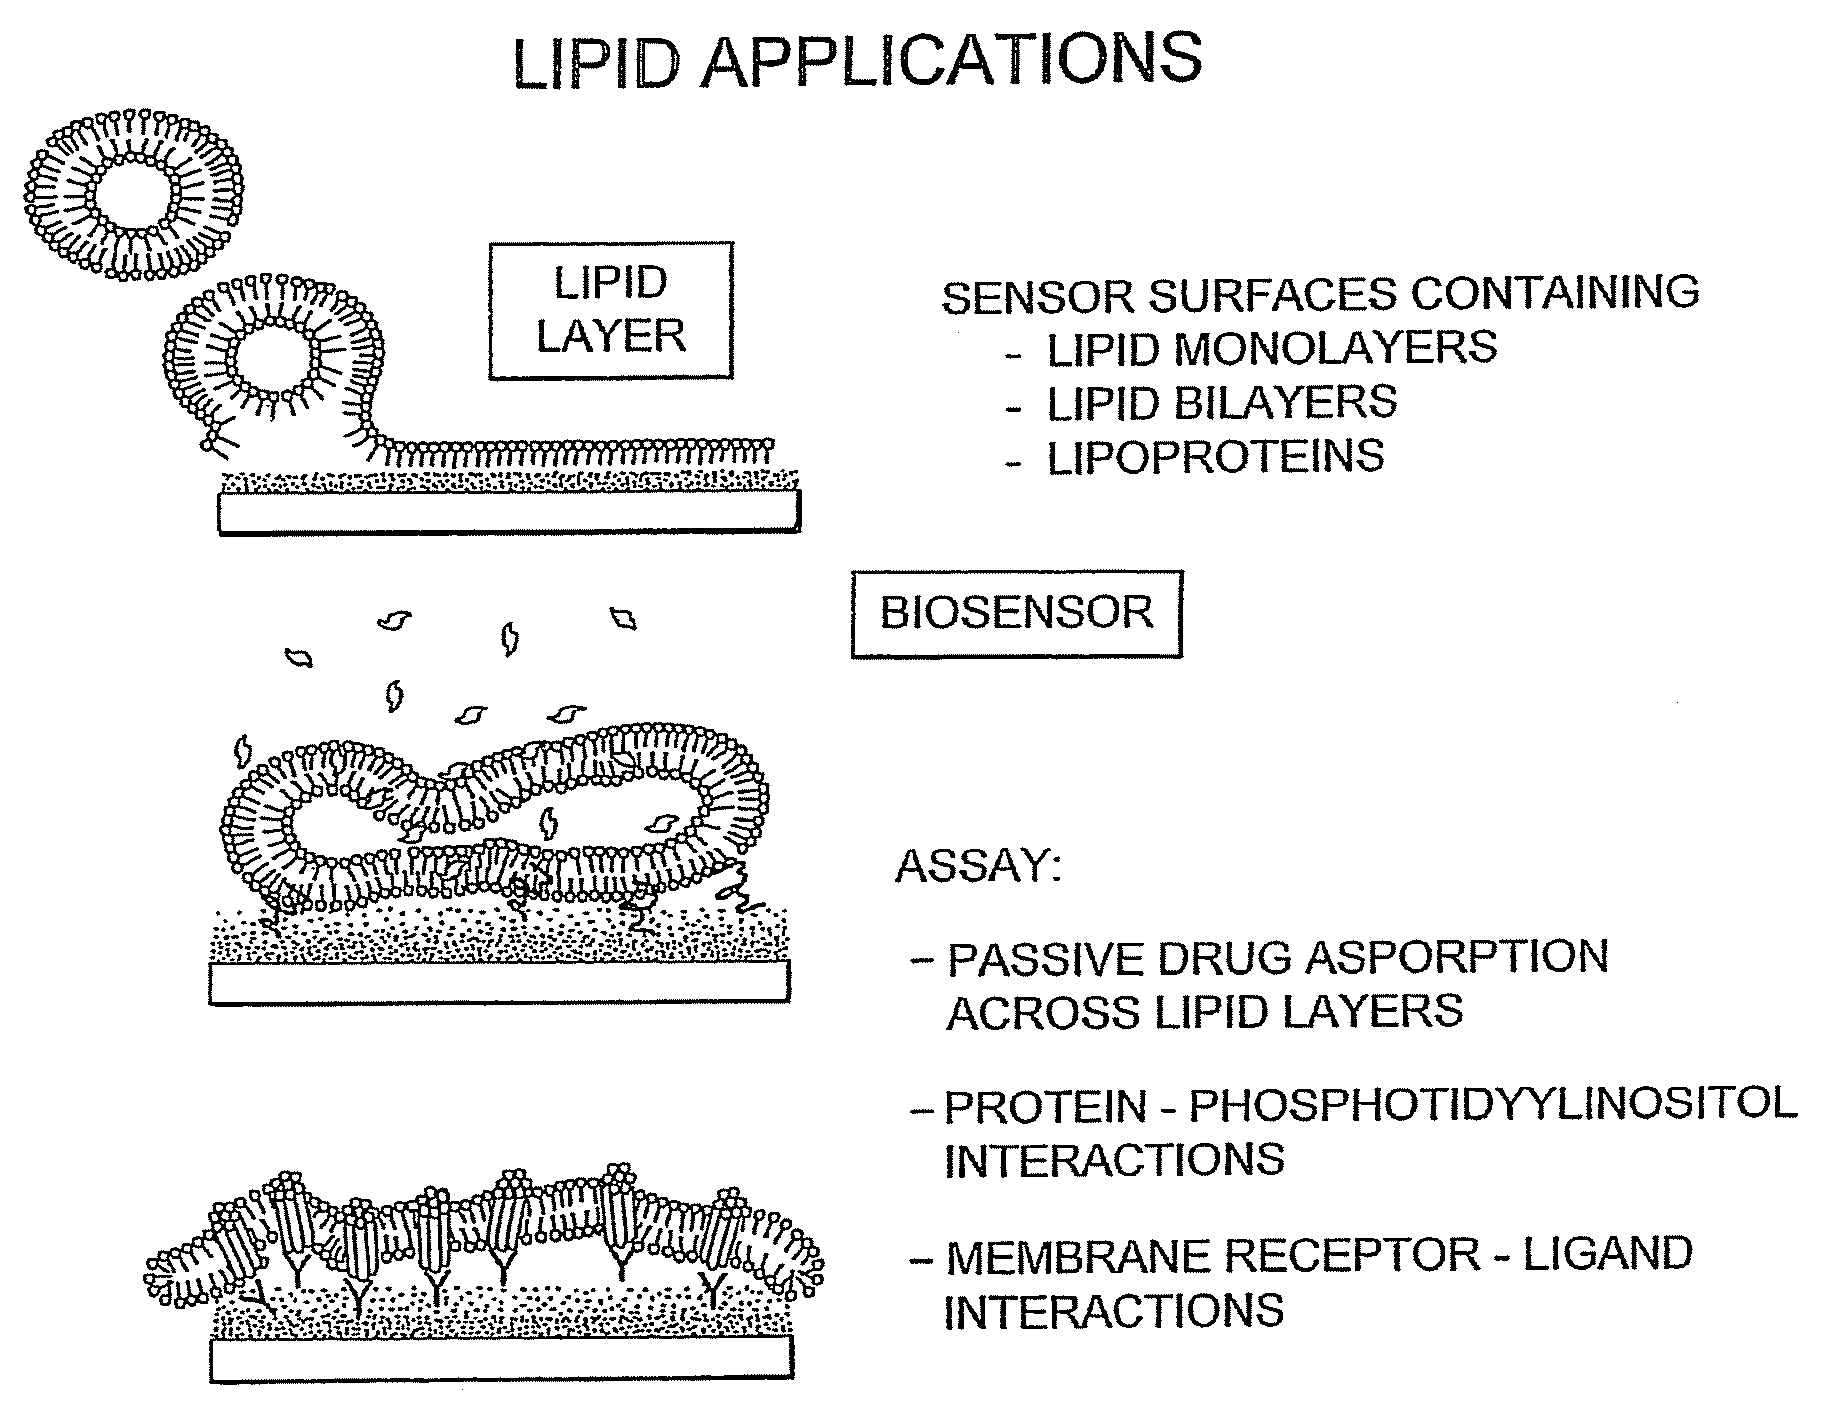 Proteolipid Membrane and Lipid Membrane Biosensor